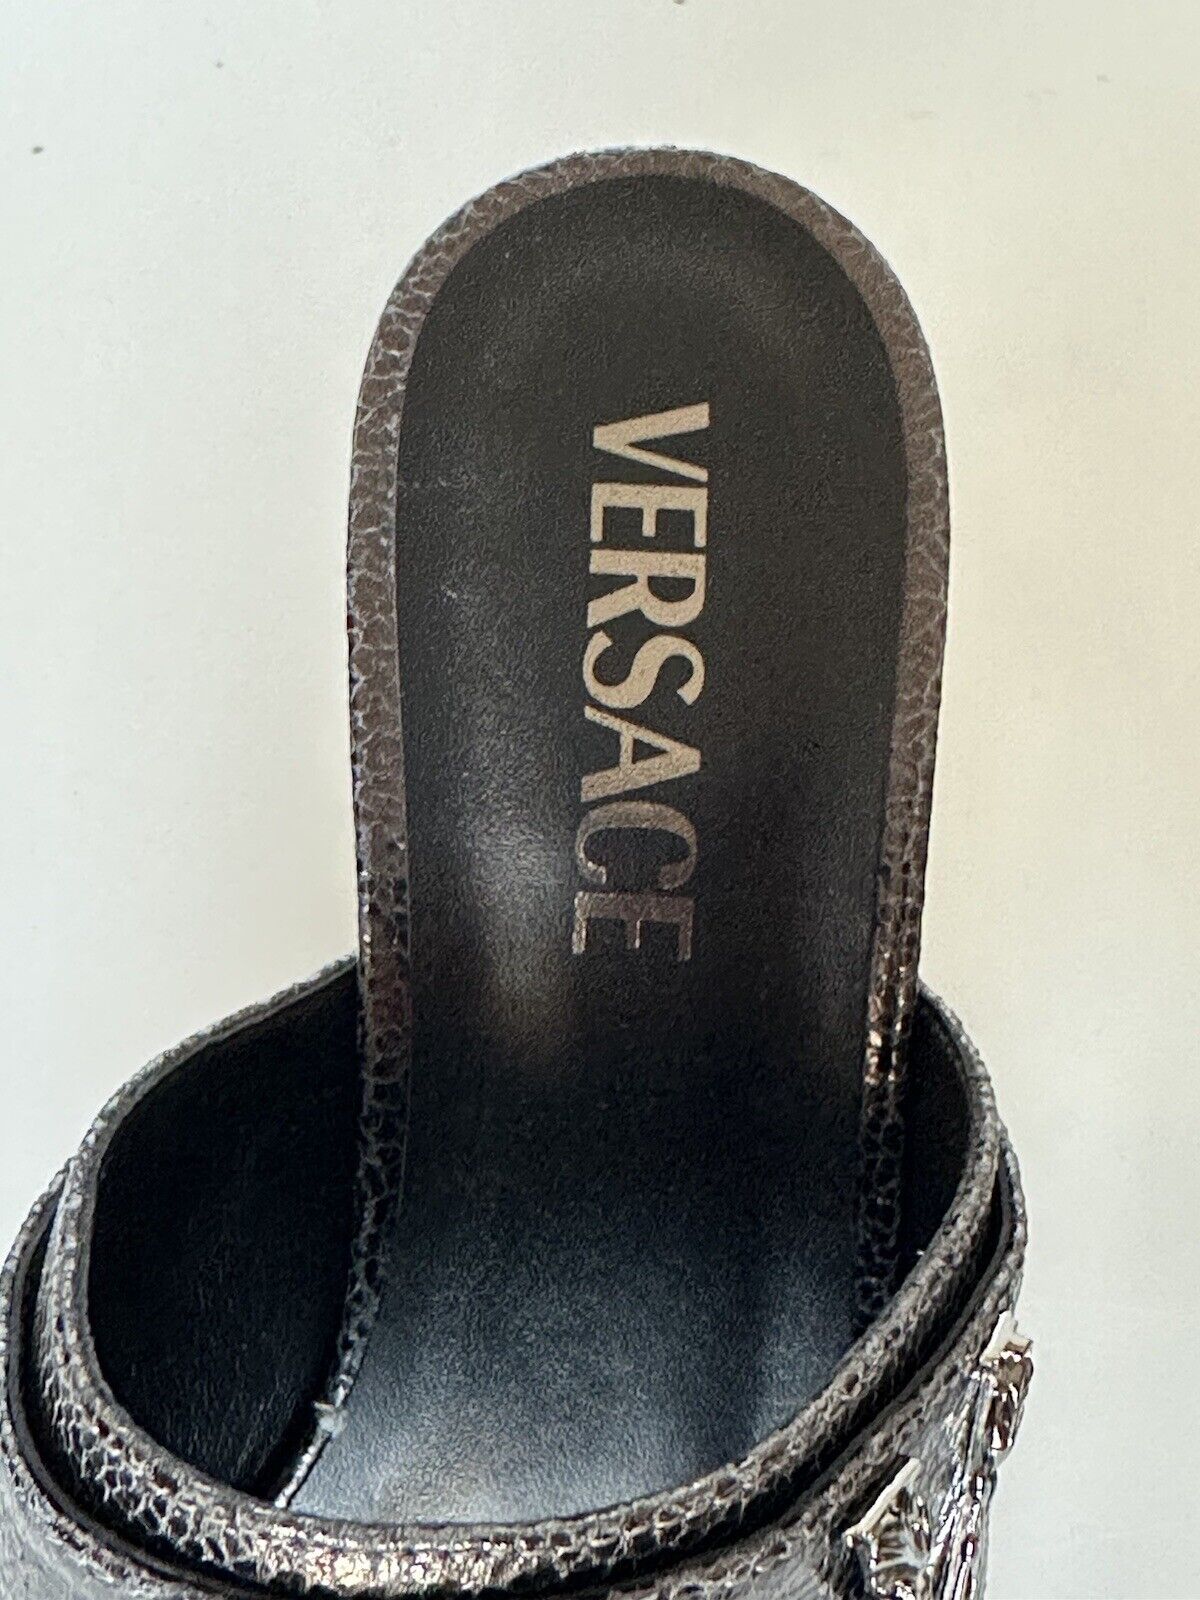 NIB $990 Versace Virtus Leather Black Sandals Shoes 8 US (38 Euro) Spain 1011901